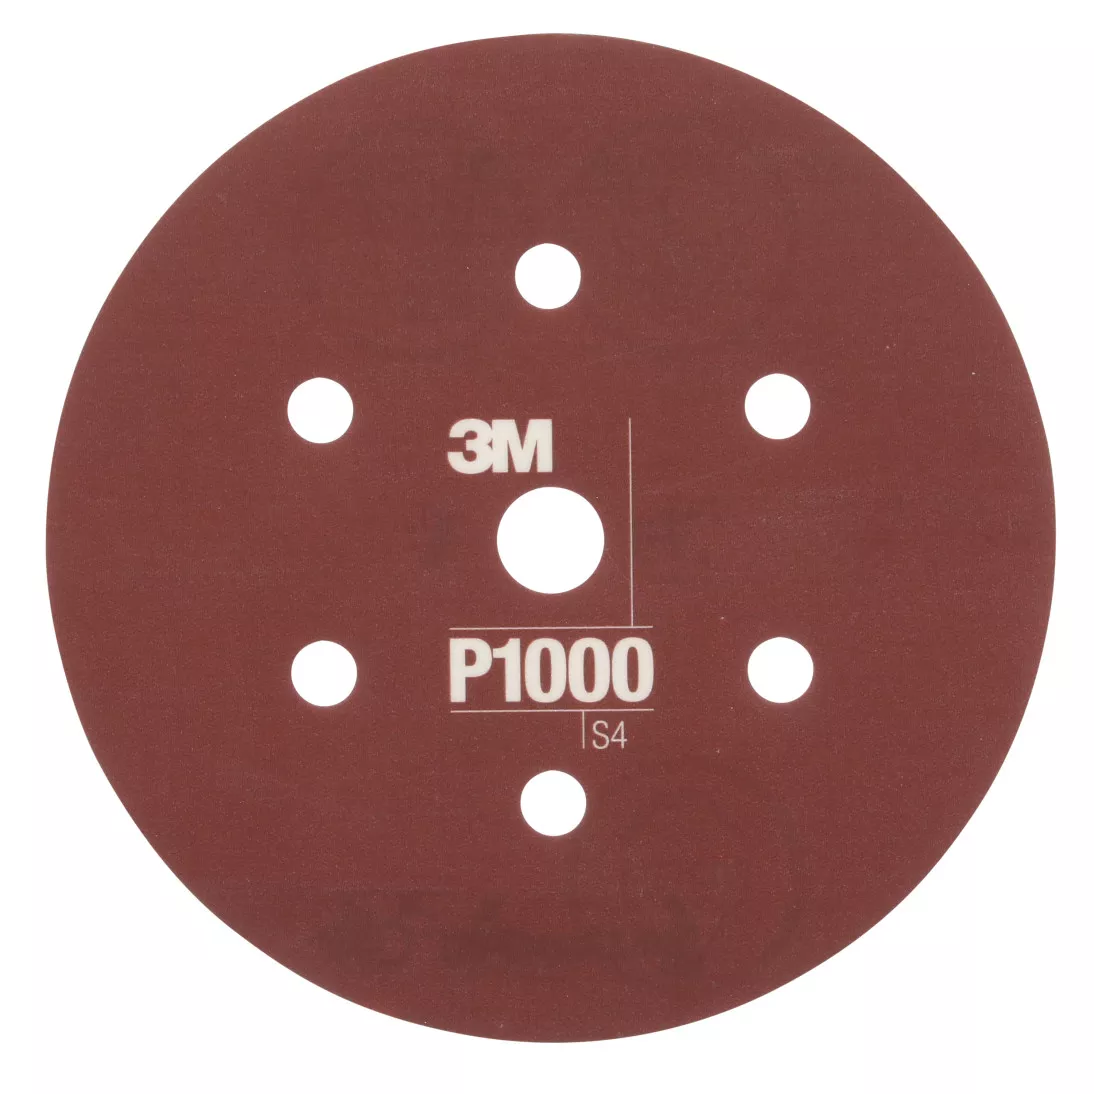 3M™ Hookit™ Flexible Abrasive Disc 270J, 34407, 6 in, Dust Free, P1000,
25 disc per carton, 5 cartons per case